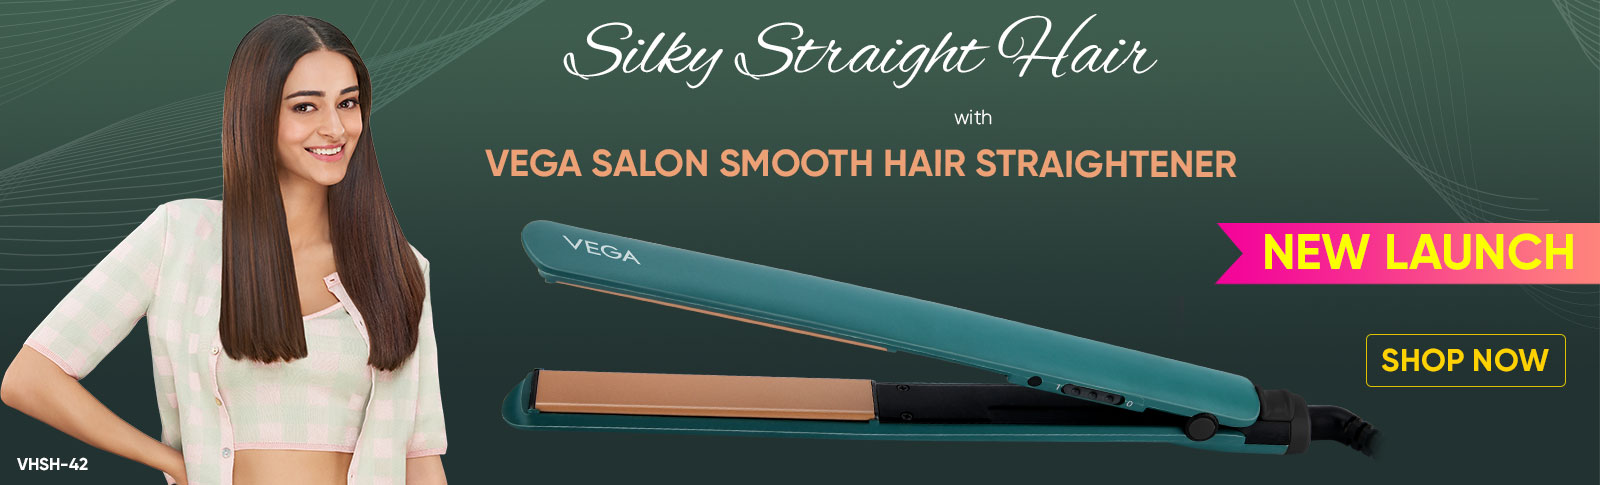 Vega Salon Smooth Hair Straightener